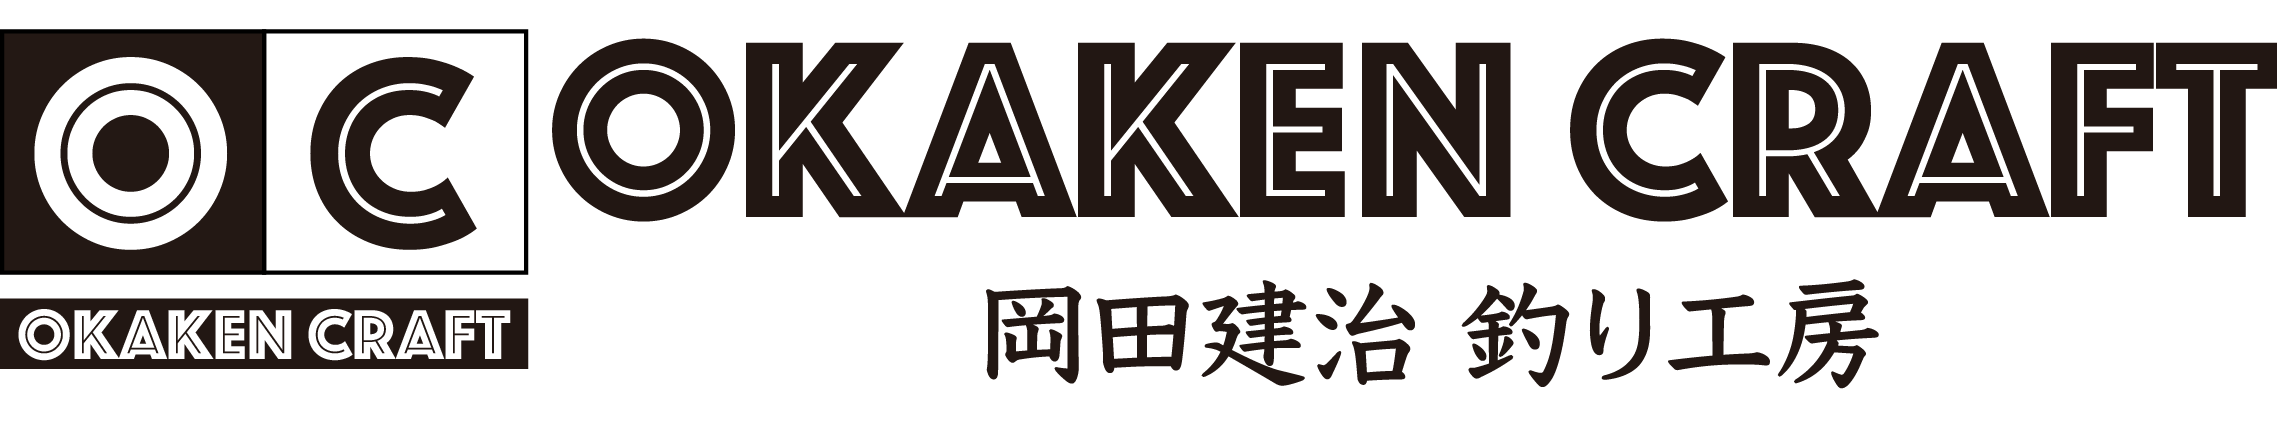 OKAKEN CRAFT 〜オカケンクラフト〜